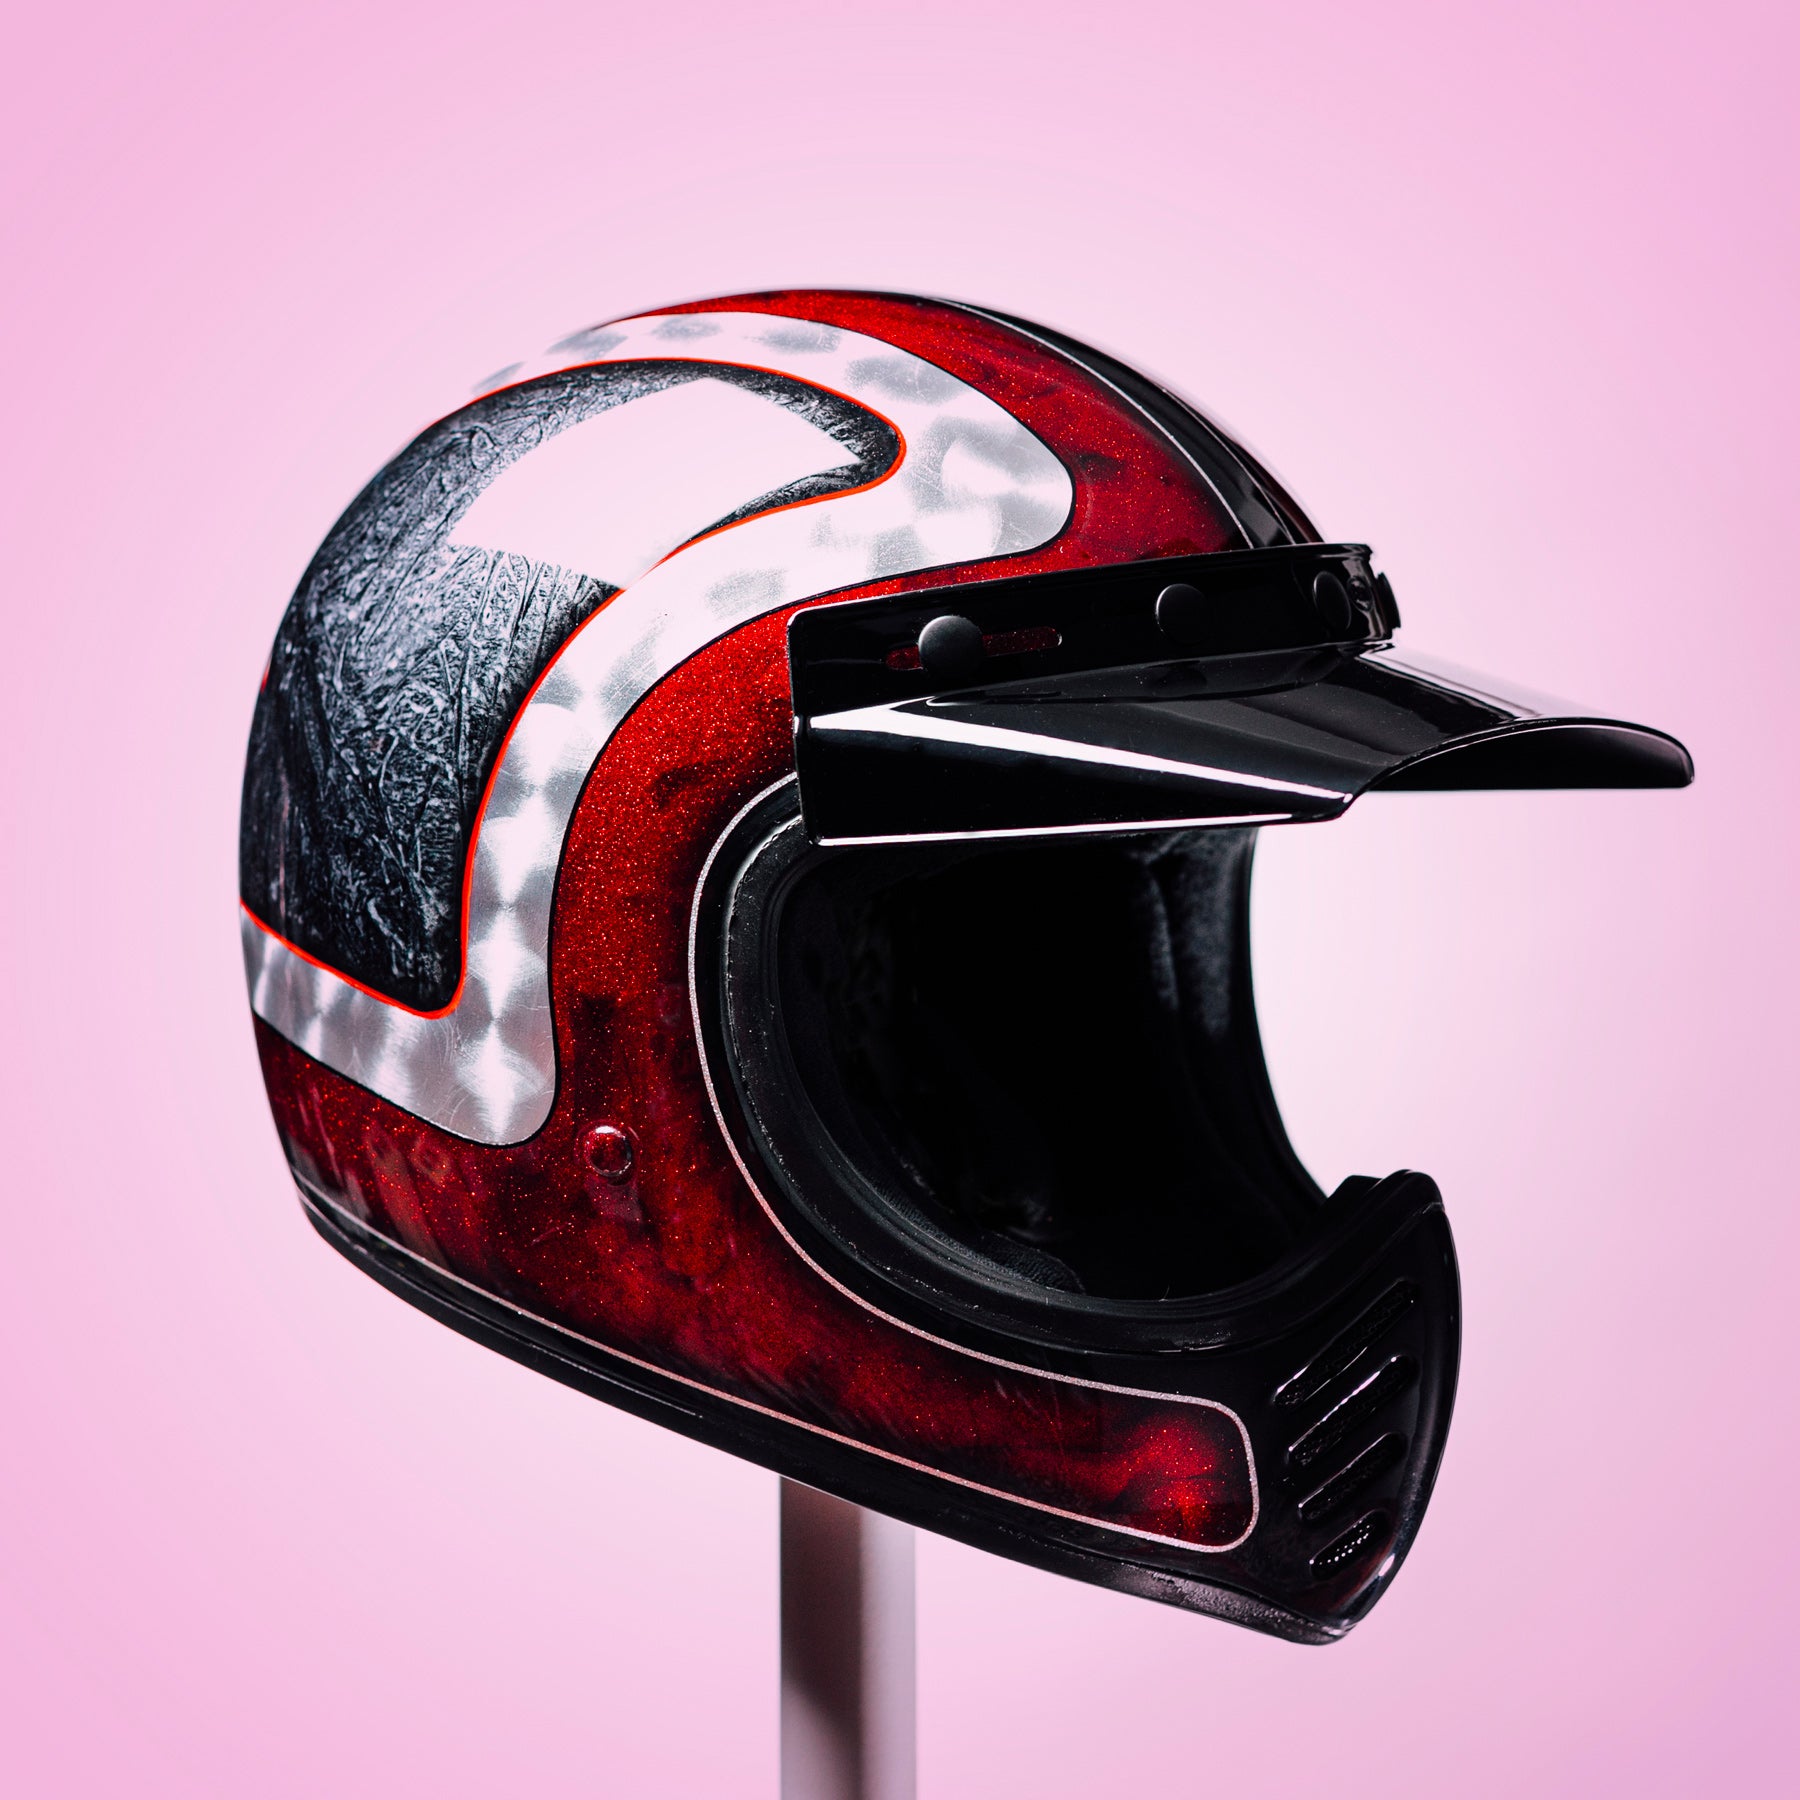 Trippy Ten helmet art show Pittsburgh Glory Daze motorcycle show Kurt Alexa Diserio Bell Helmets Boosted Brad Barnes